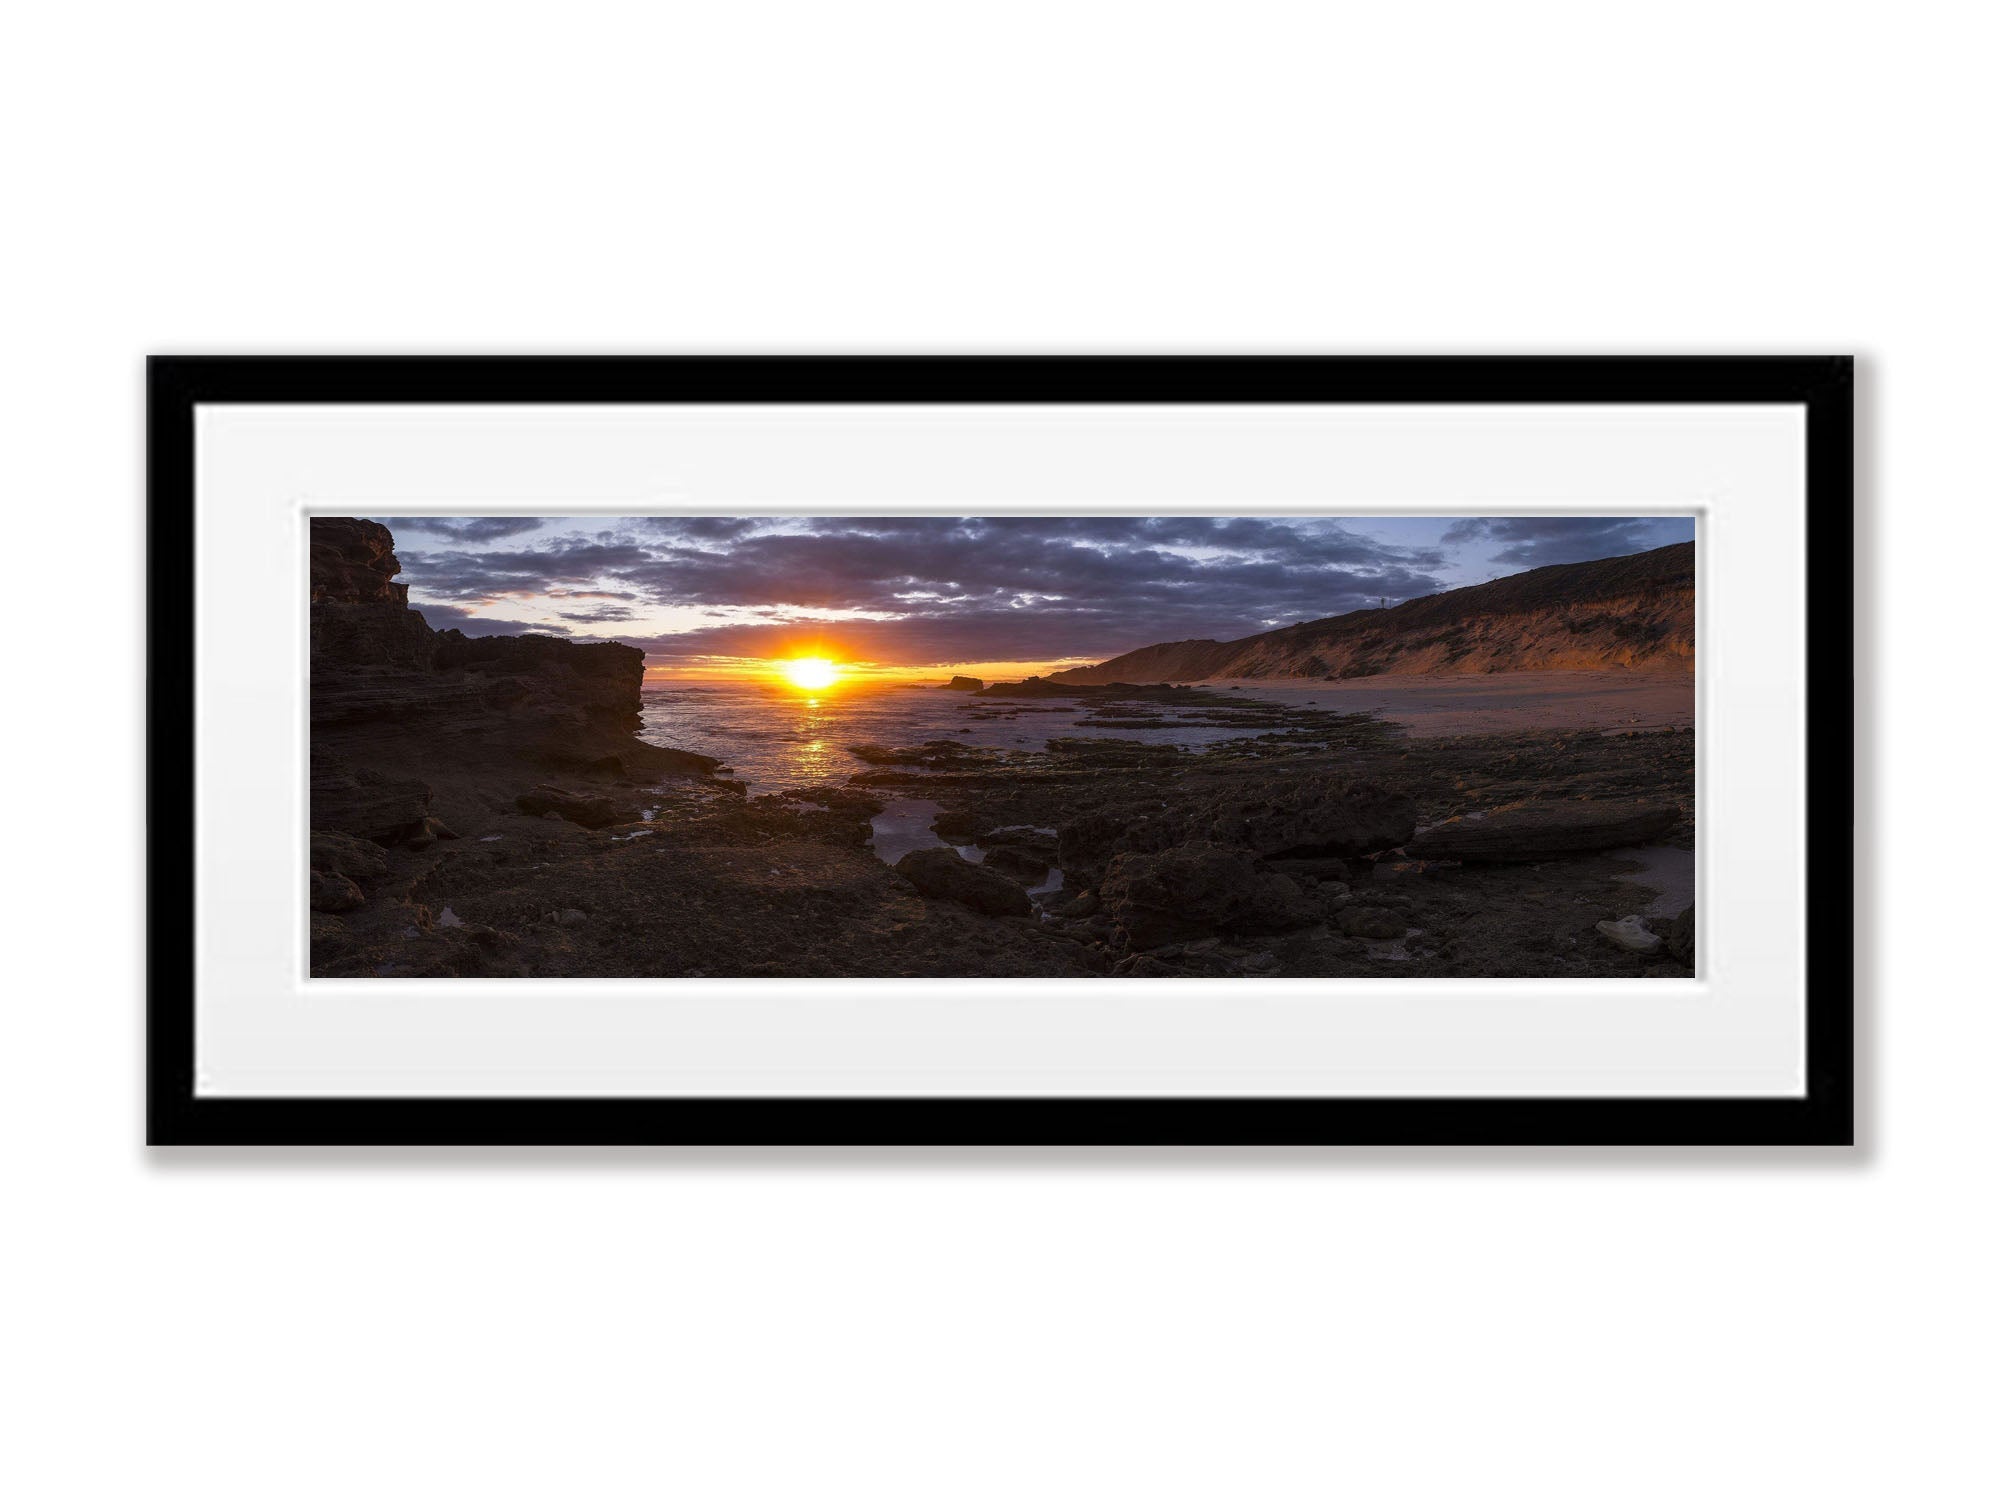 Portsea sunset, Mornington Peninsula, VIC